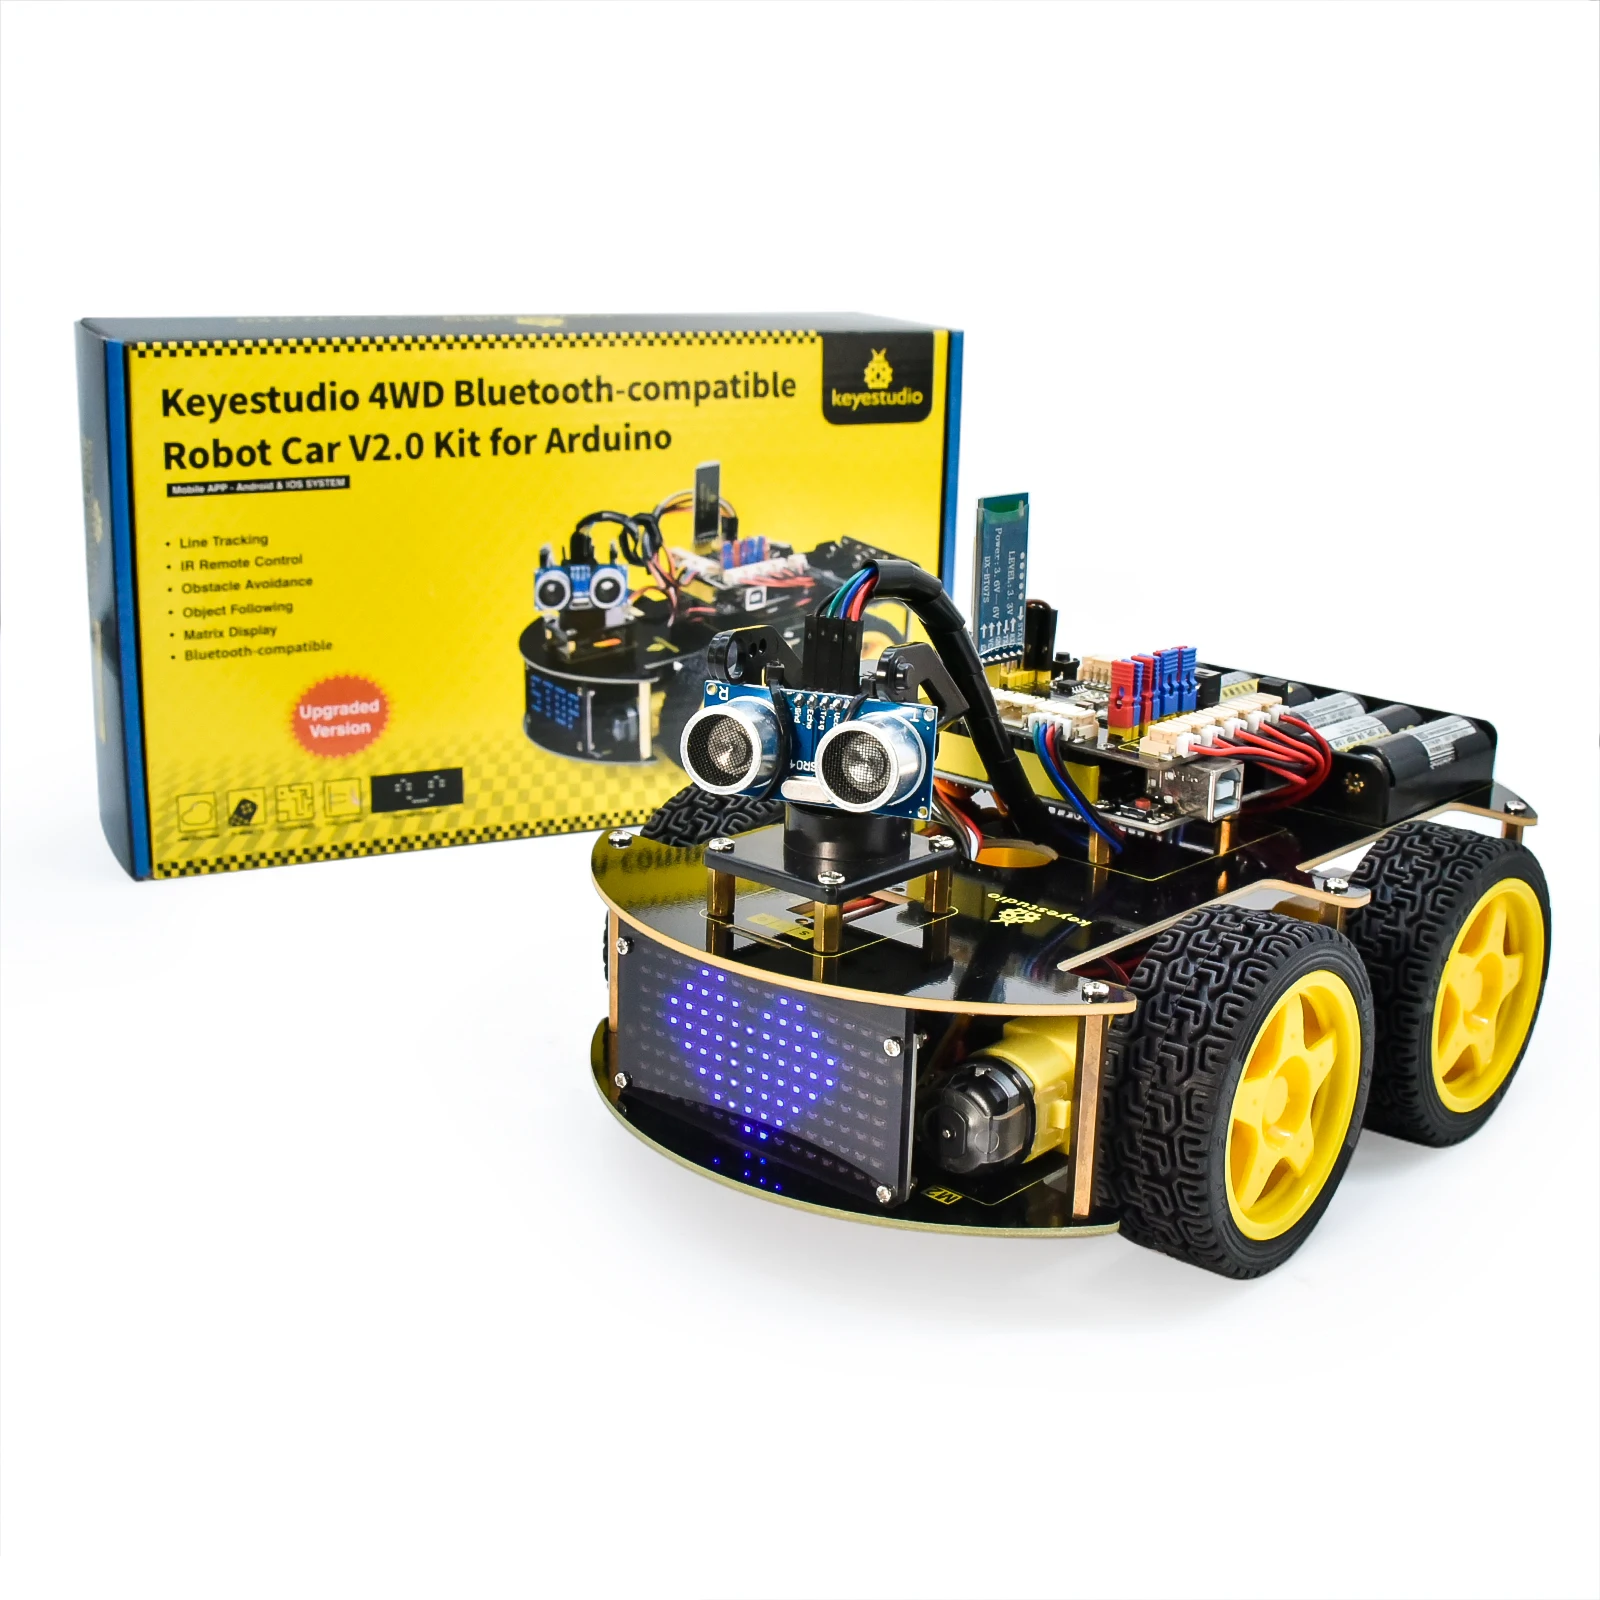 Keyestudio 4WD Multi BT Smart Car for Arduino Kit Robot Upgraded V2.0 W/LED Display Stem EDU /Programming DIY Robot Car